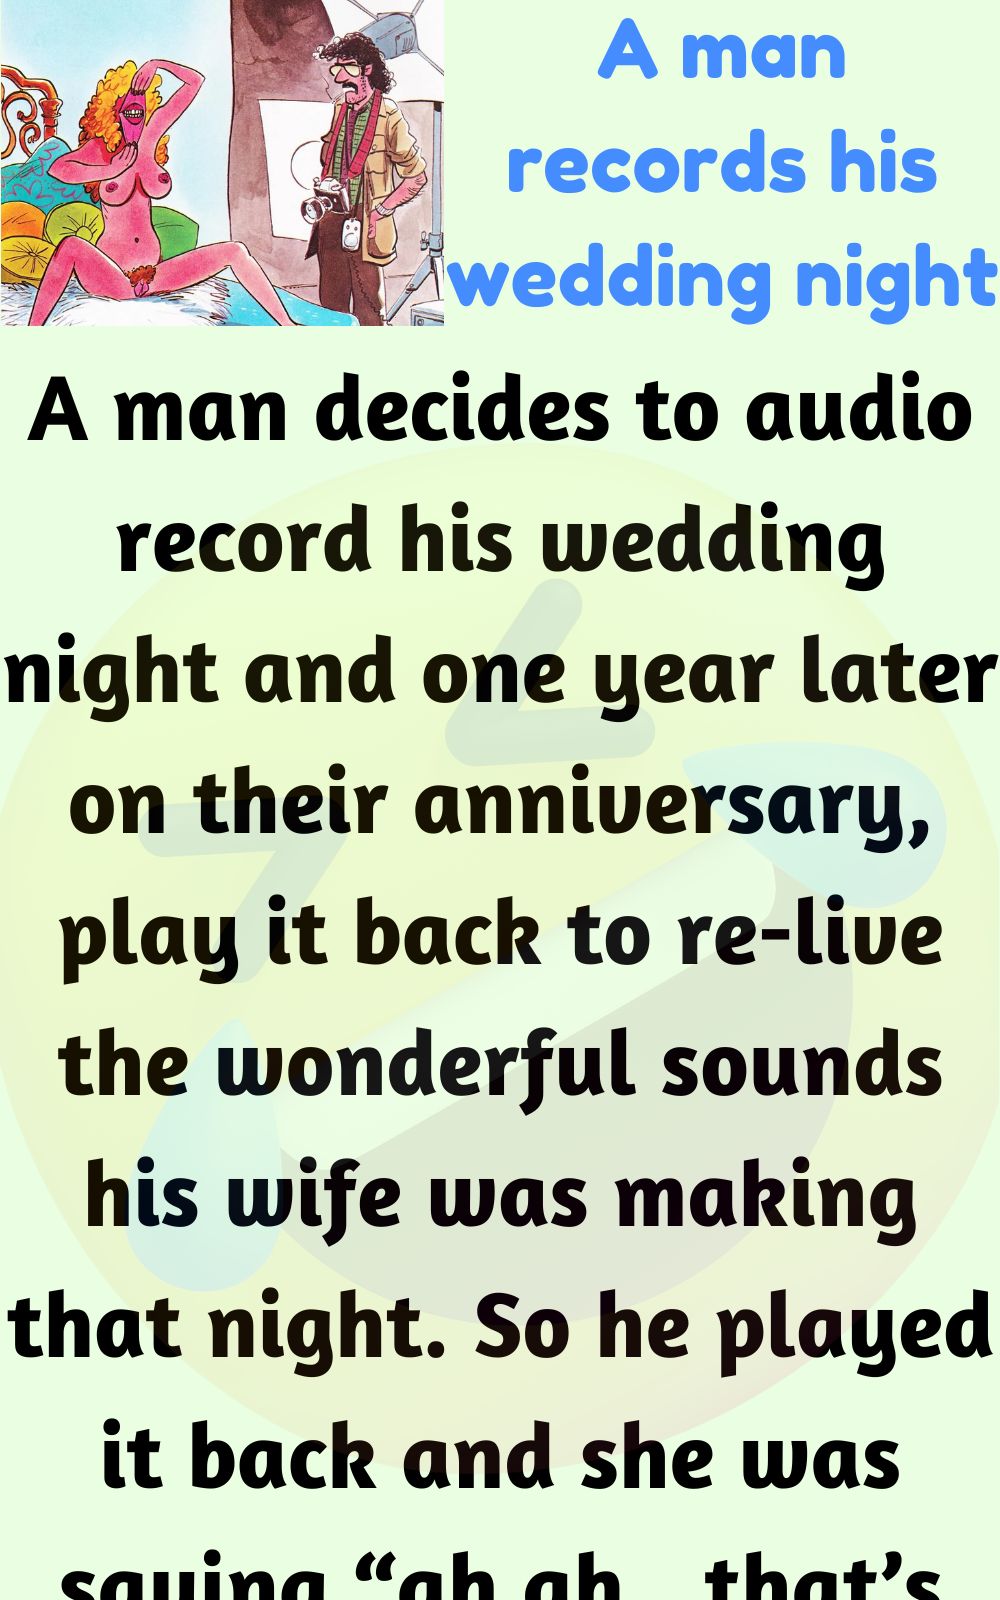 A man records his wedding night